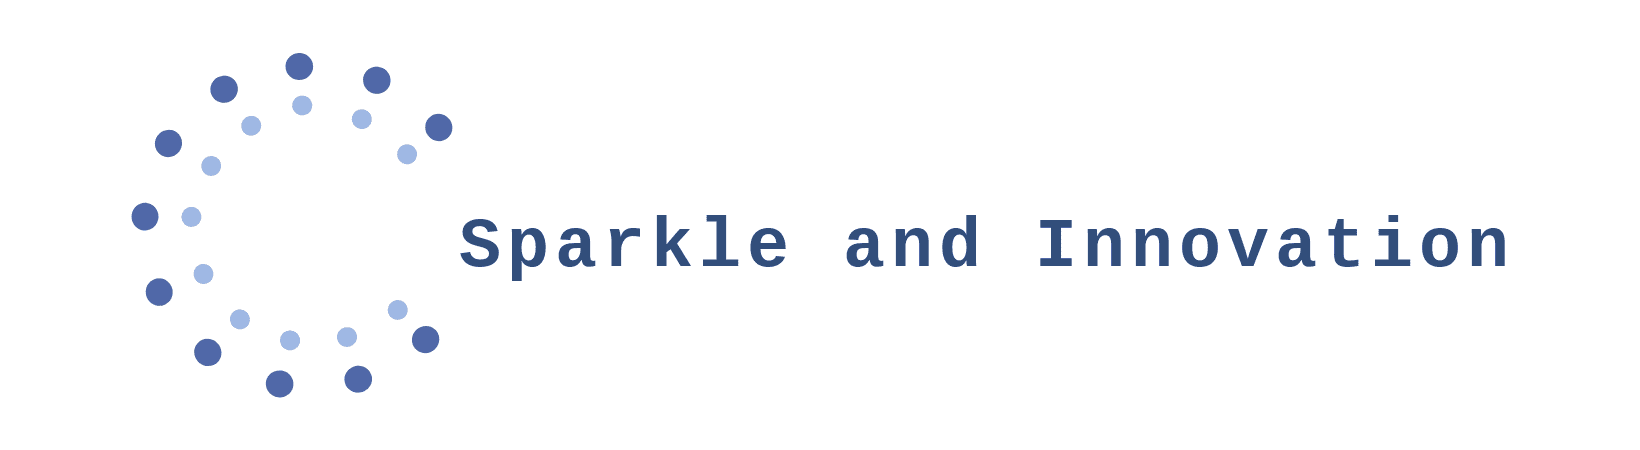 Sparkle and Innovation Logo